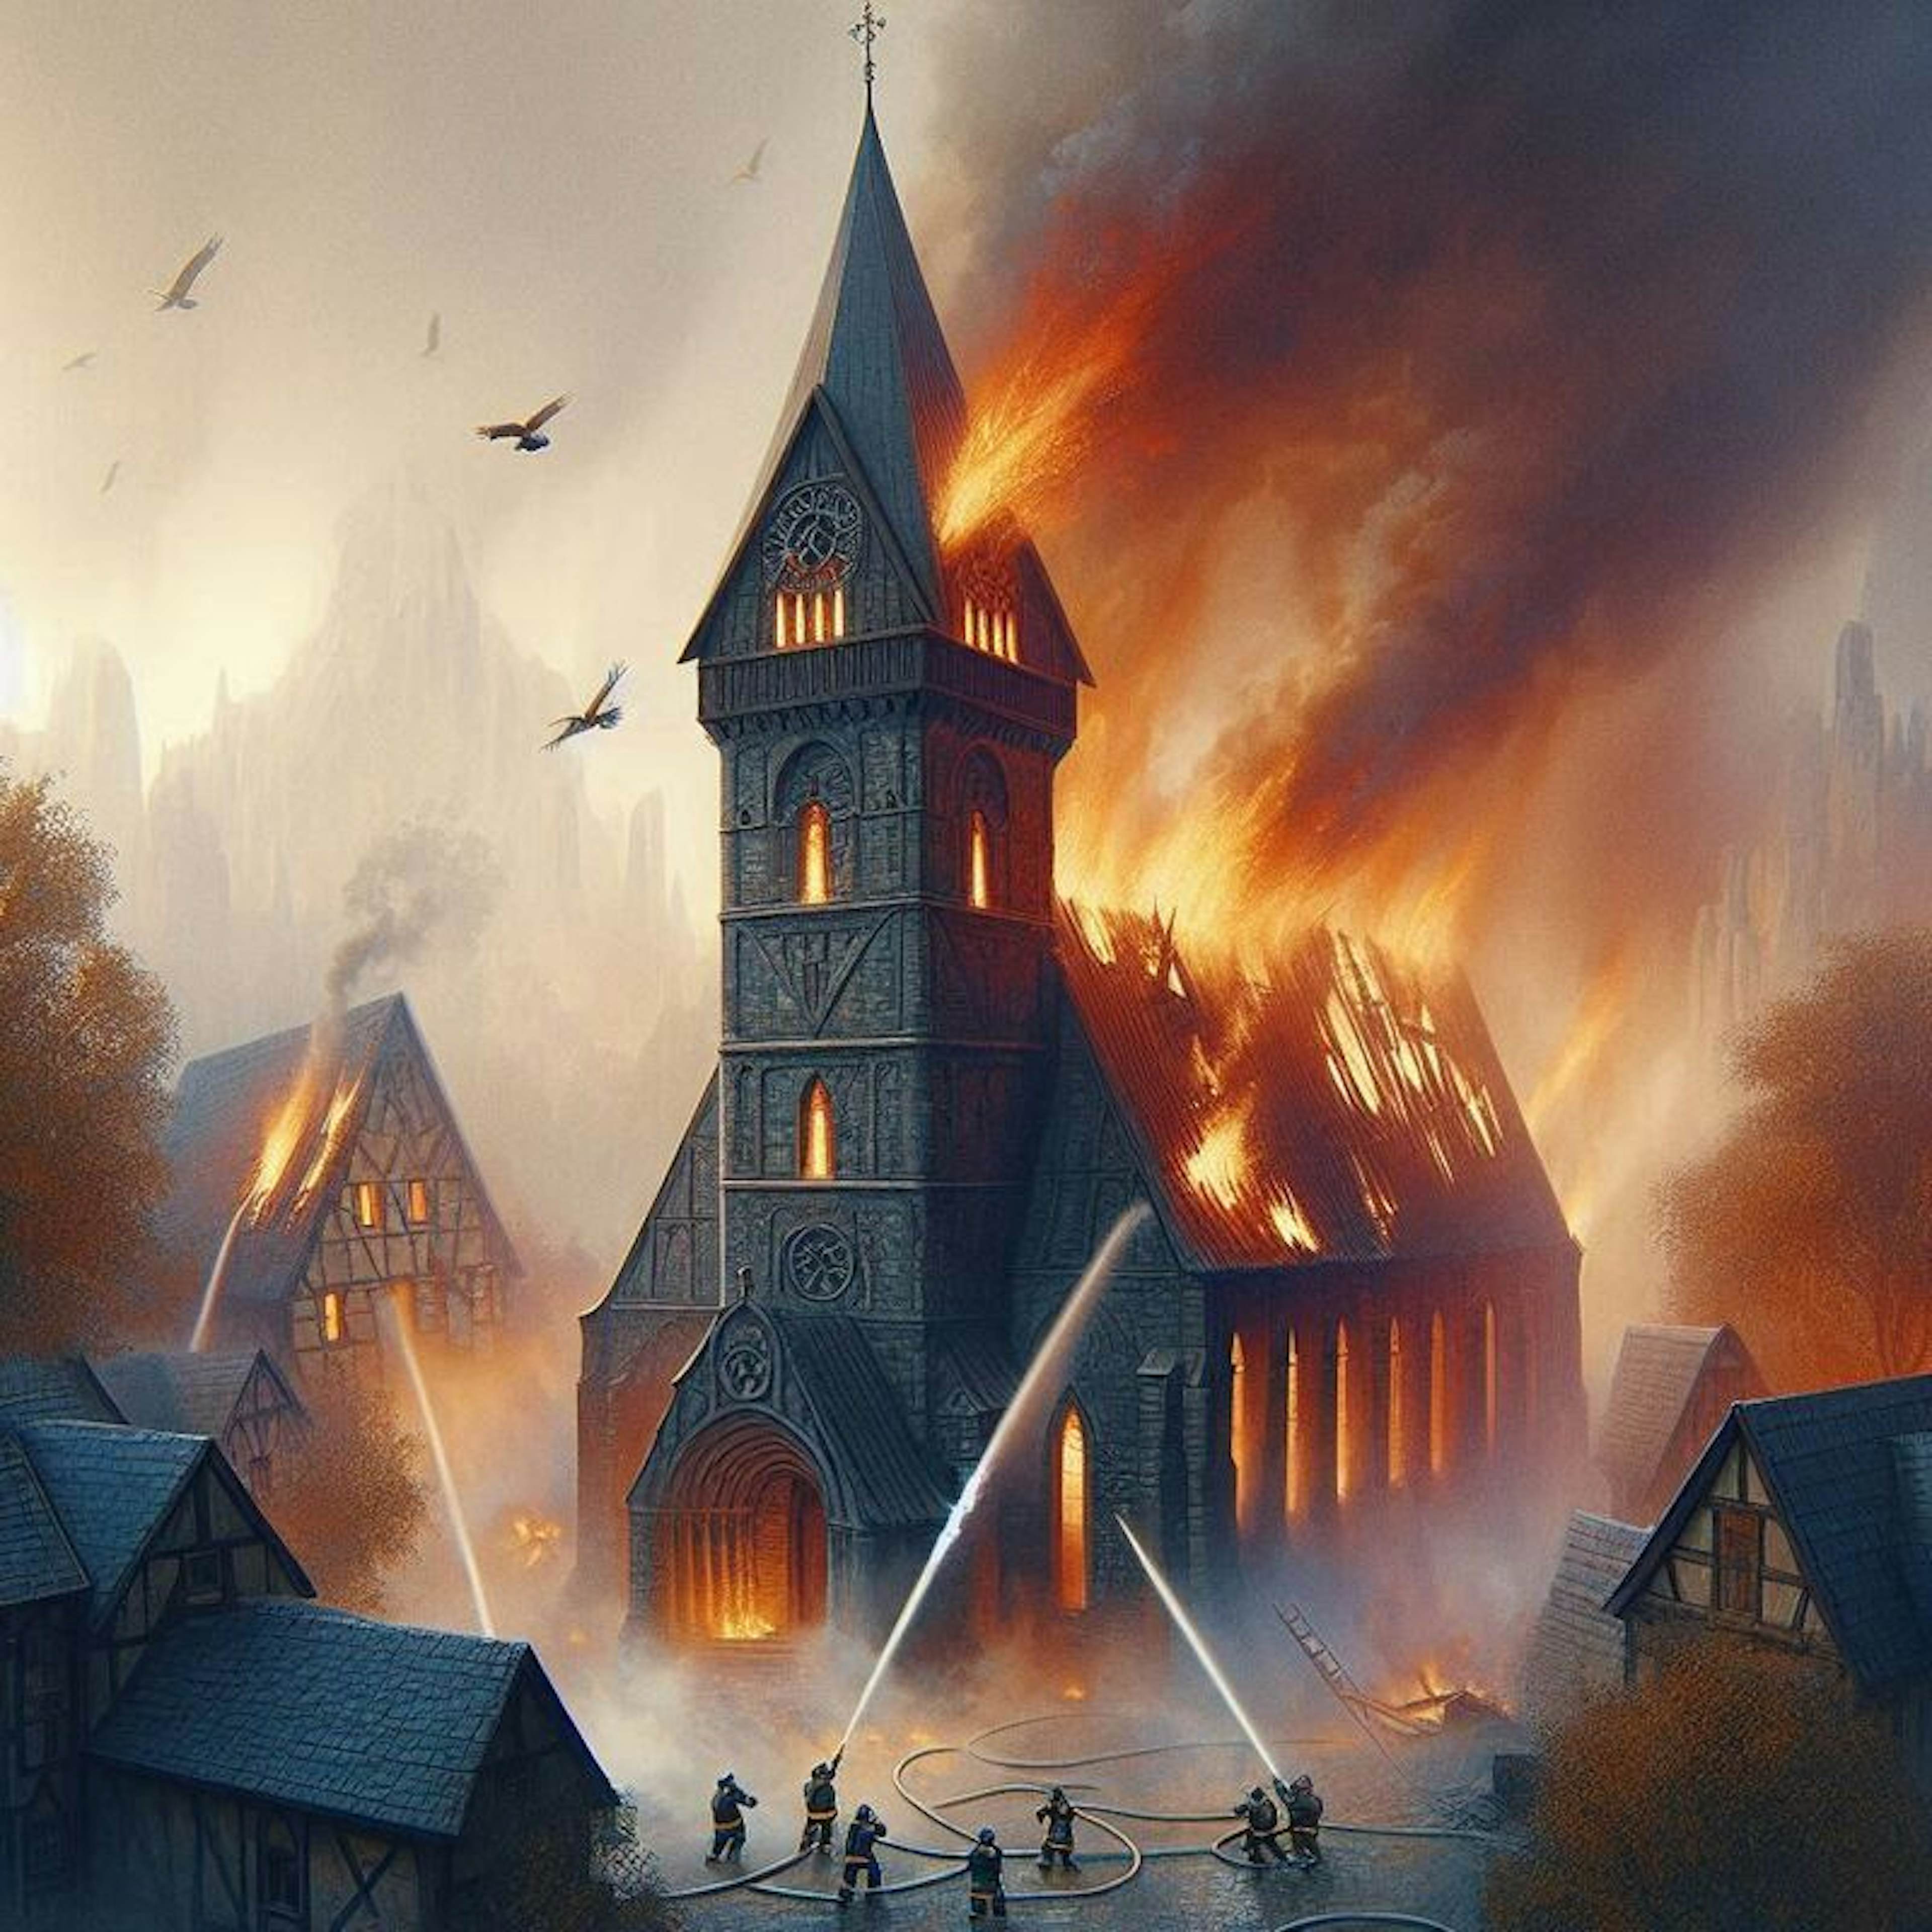 Mechelen Tower on fire image